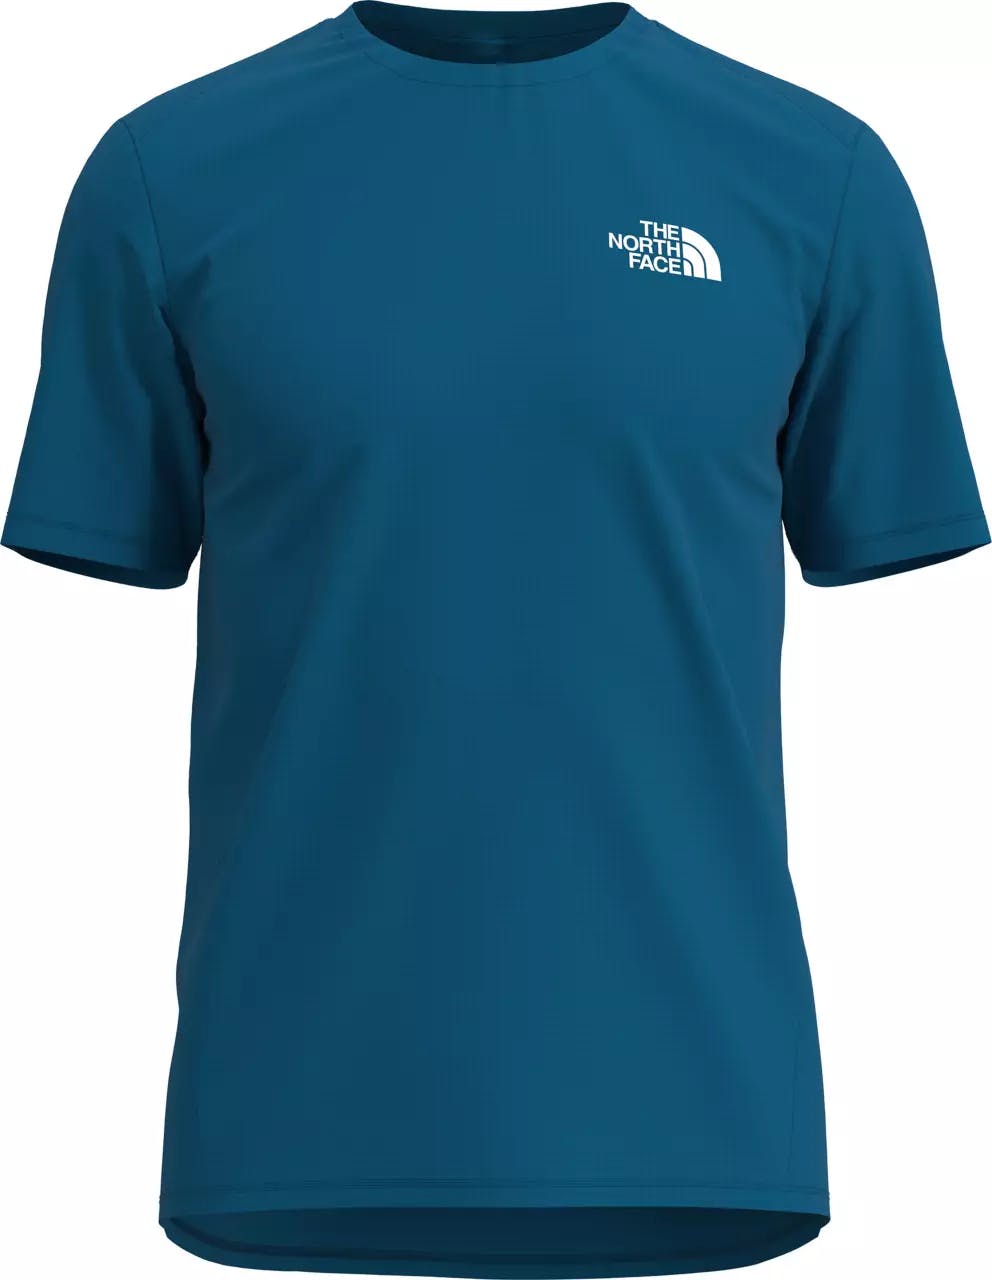 The North Face Men's Sunriser Short Sleeve Shirt